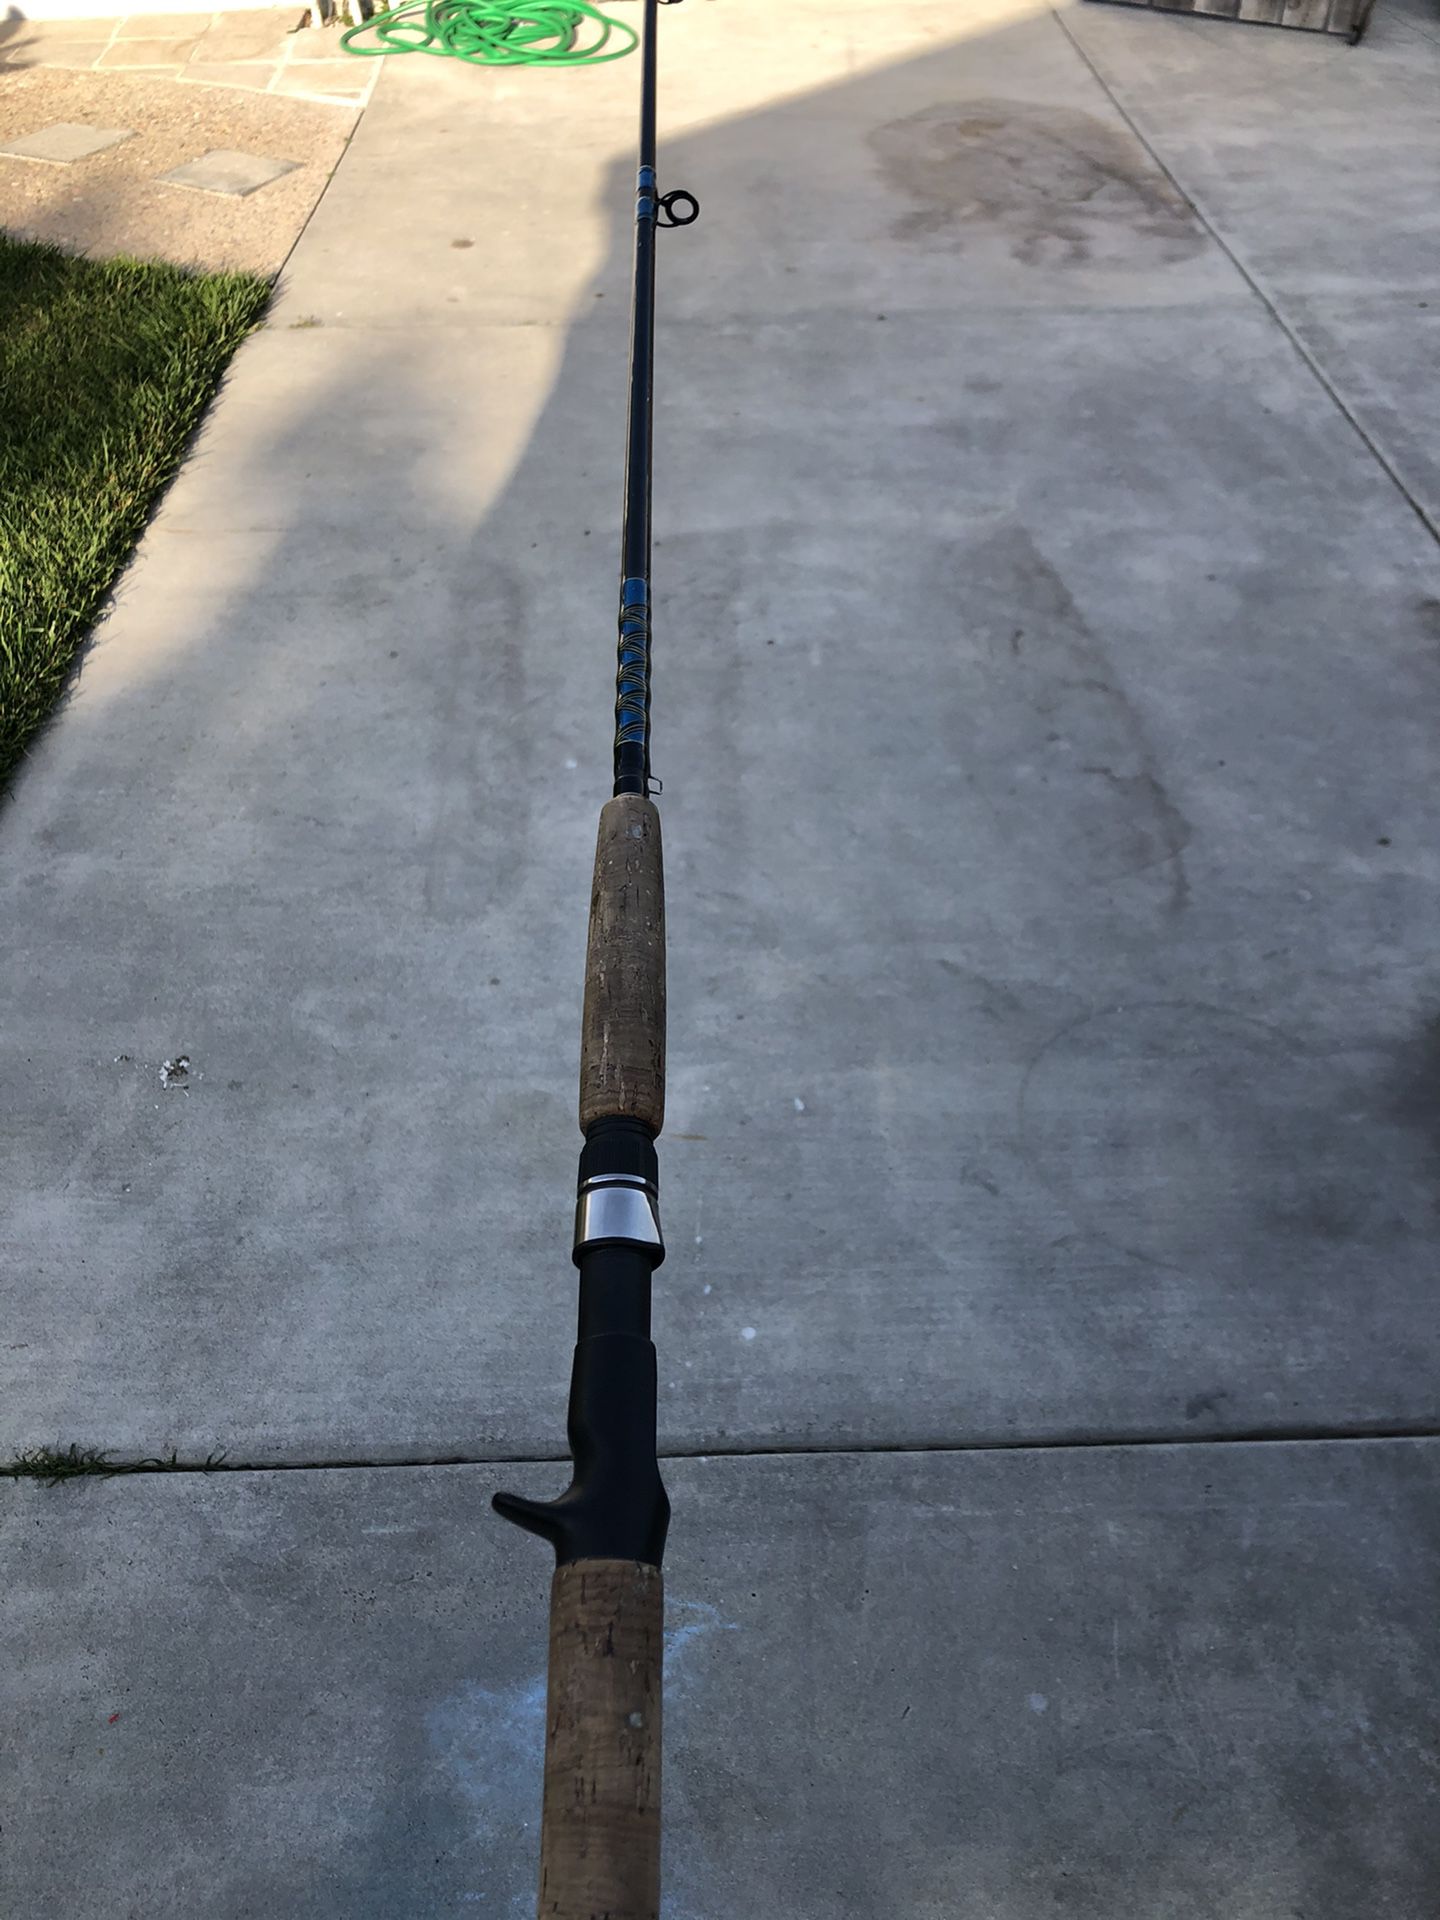 Quantum Blue Runner Inshore Fishing Rod for Sale in Santa Ana, CA - OfferUp